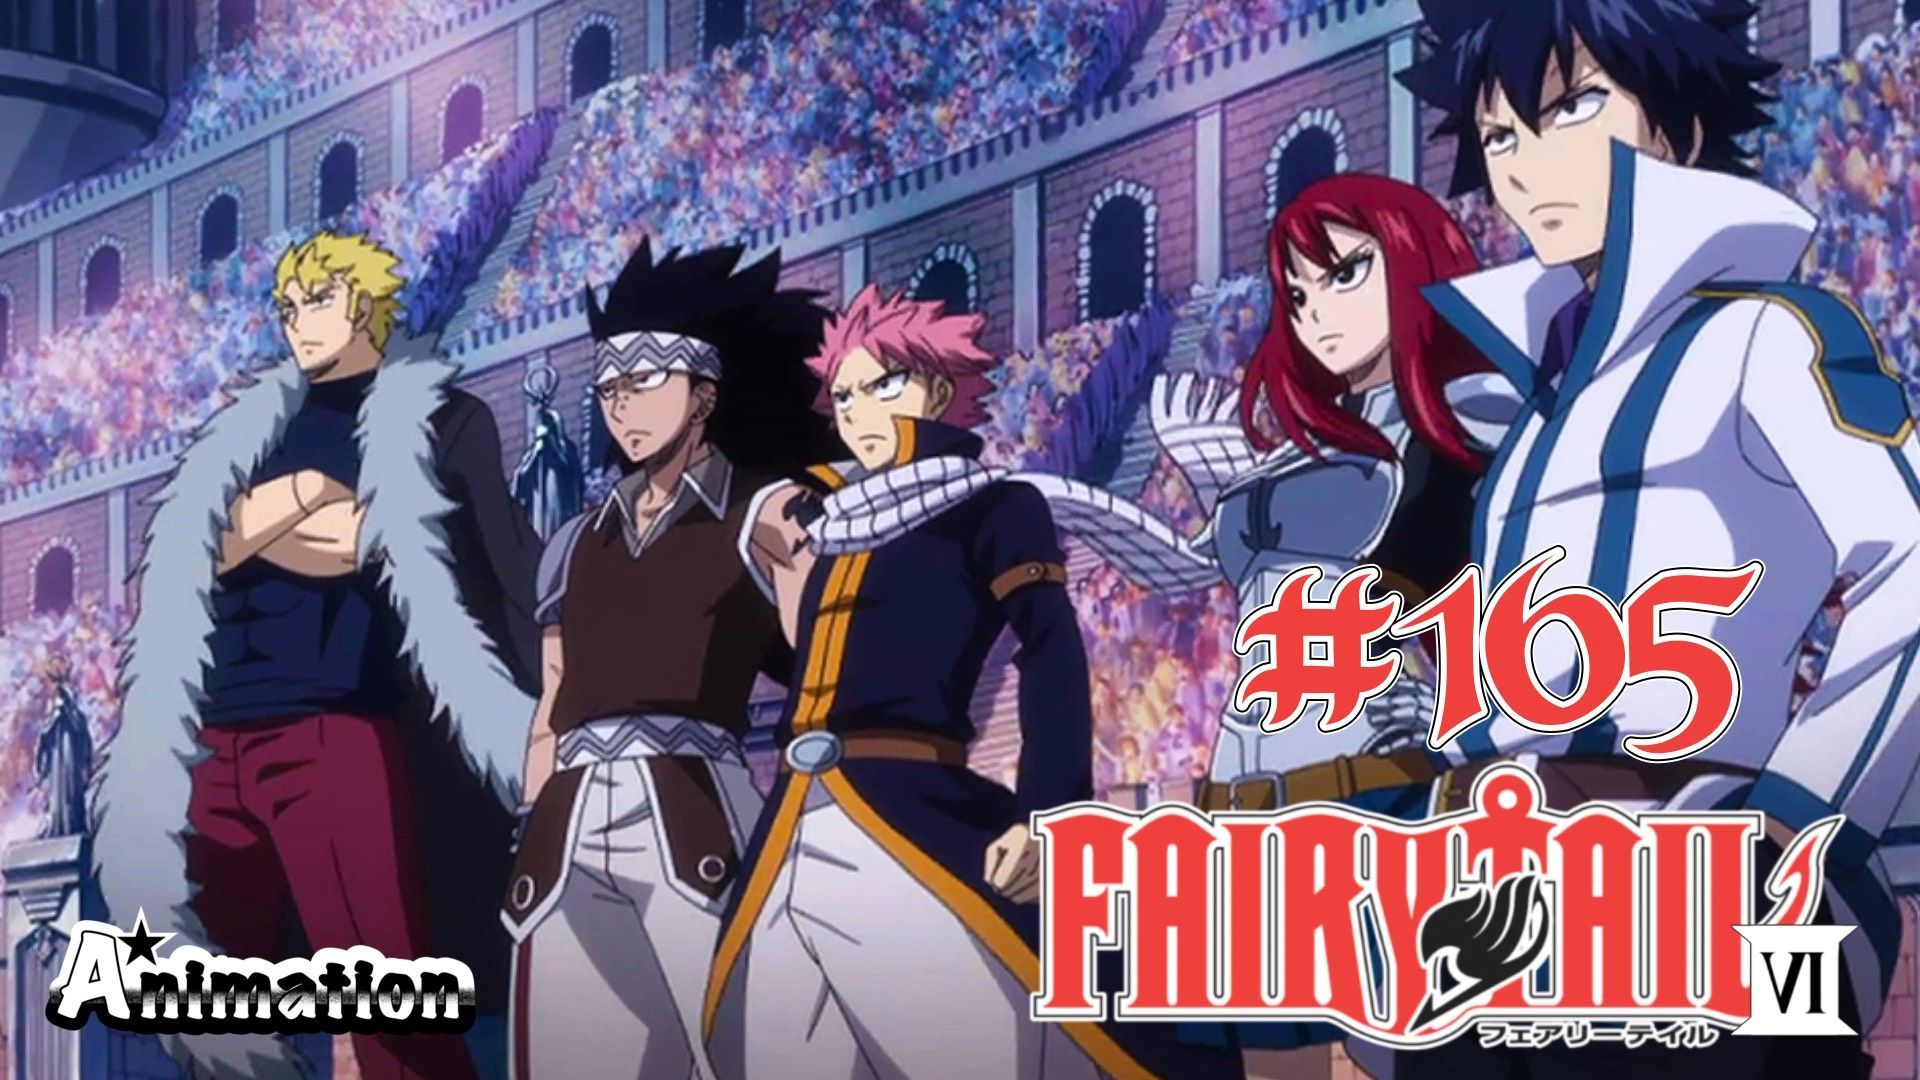 EnA Sub] (Vietsub+Kara) Fairy Tail opening 16 full HD - Strike Back -  BiliBili